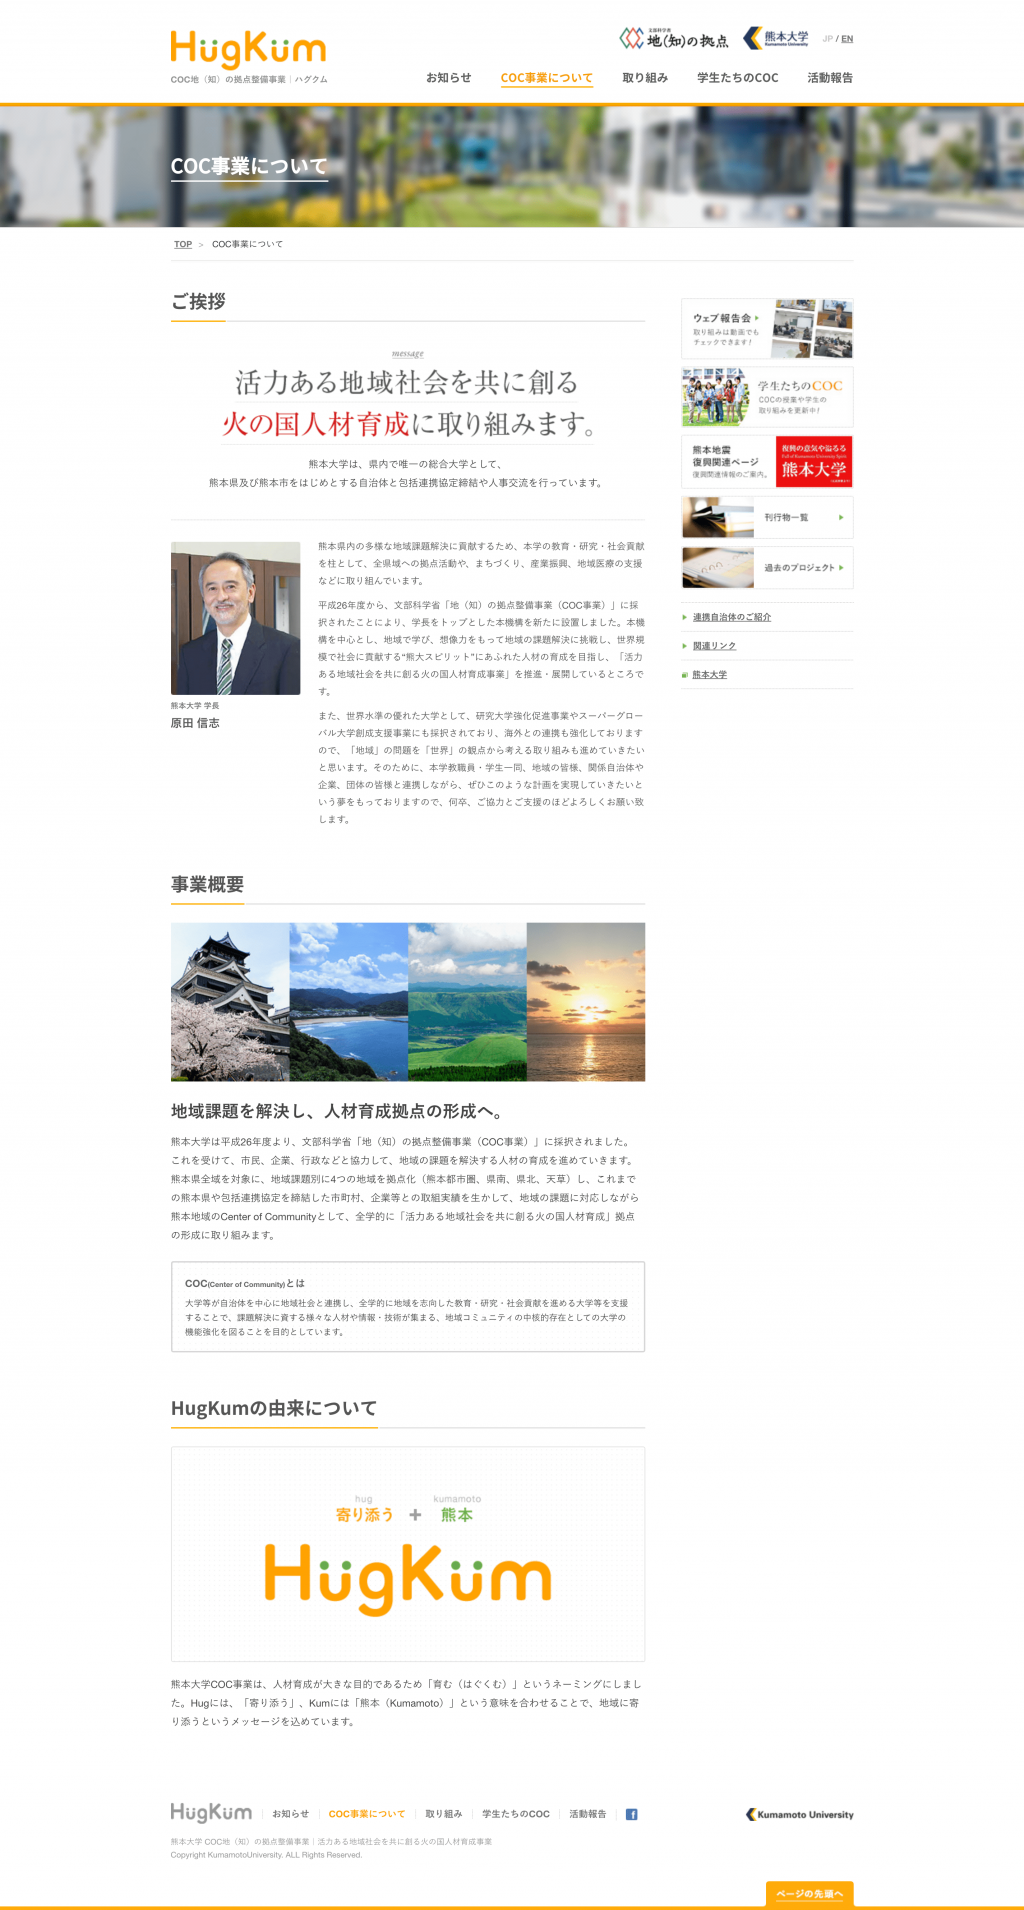 HugKum 熊本大学COC事業サイトのパソコン表示